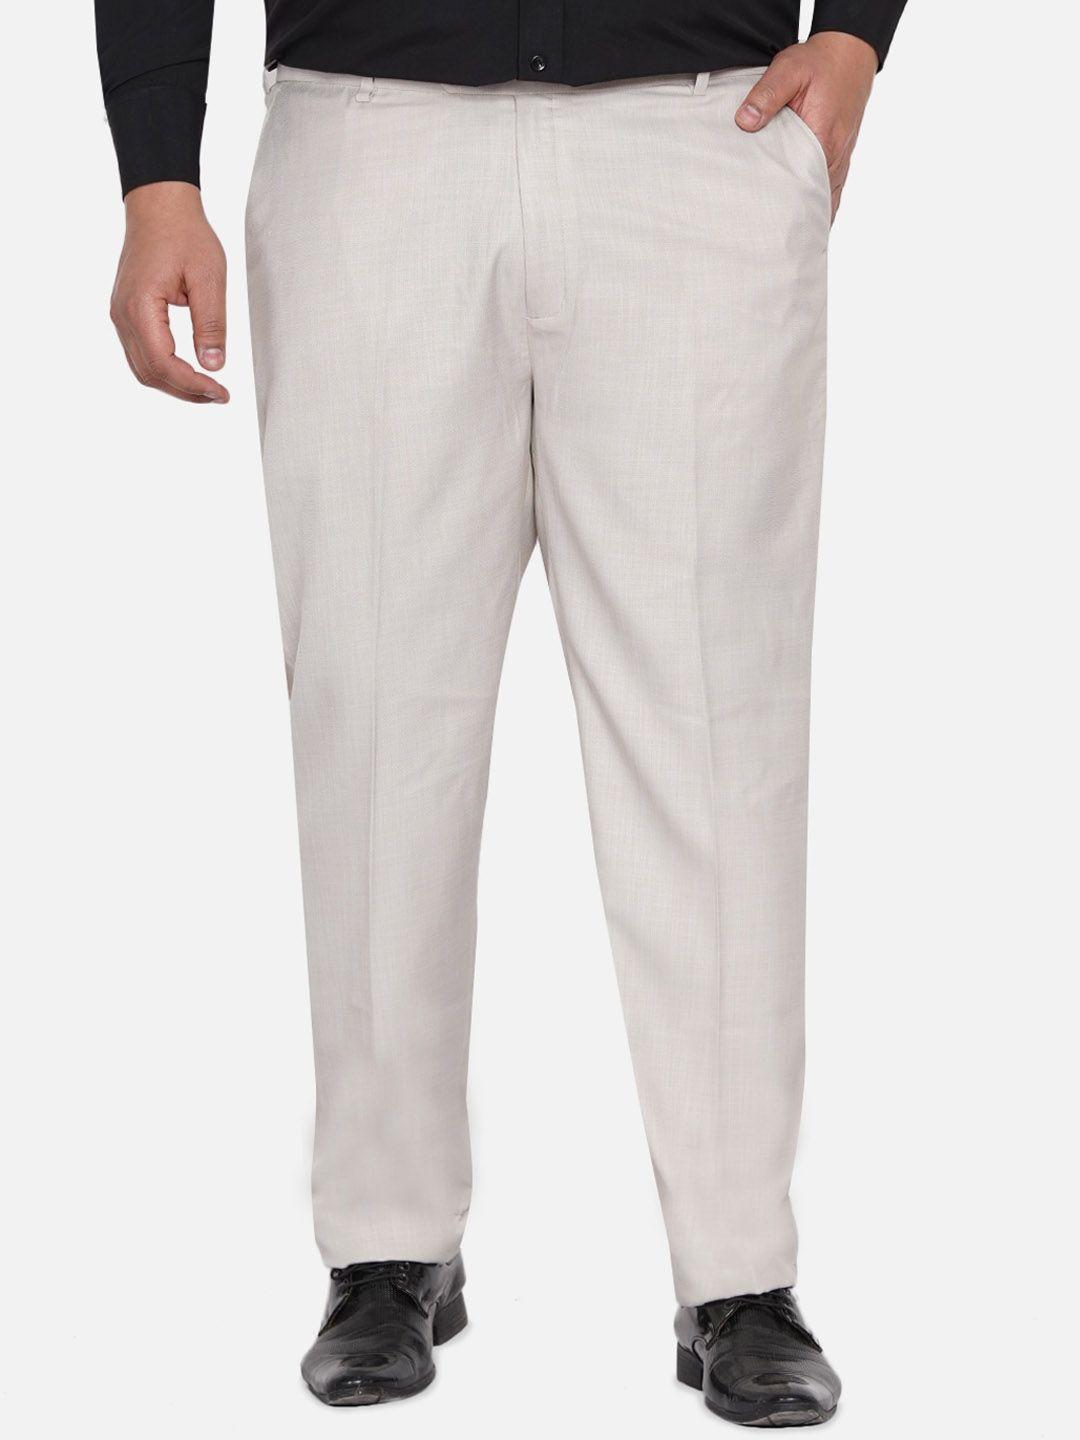 john pride men plus size mid-rise plain cotton formal trousers